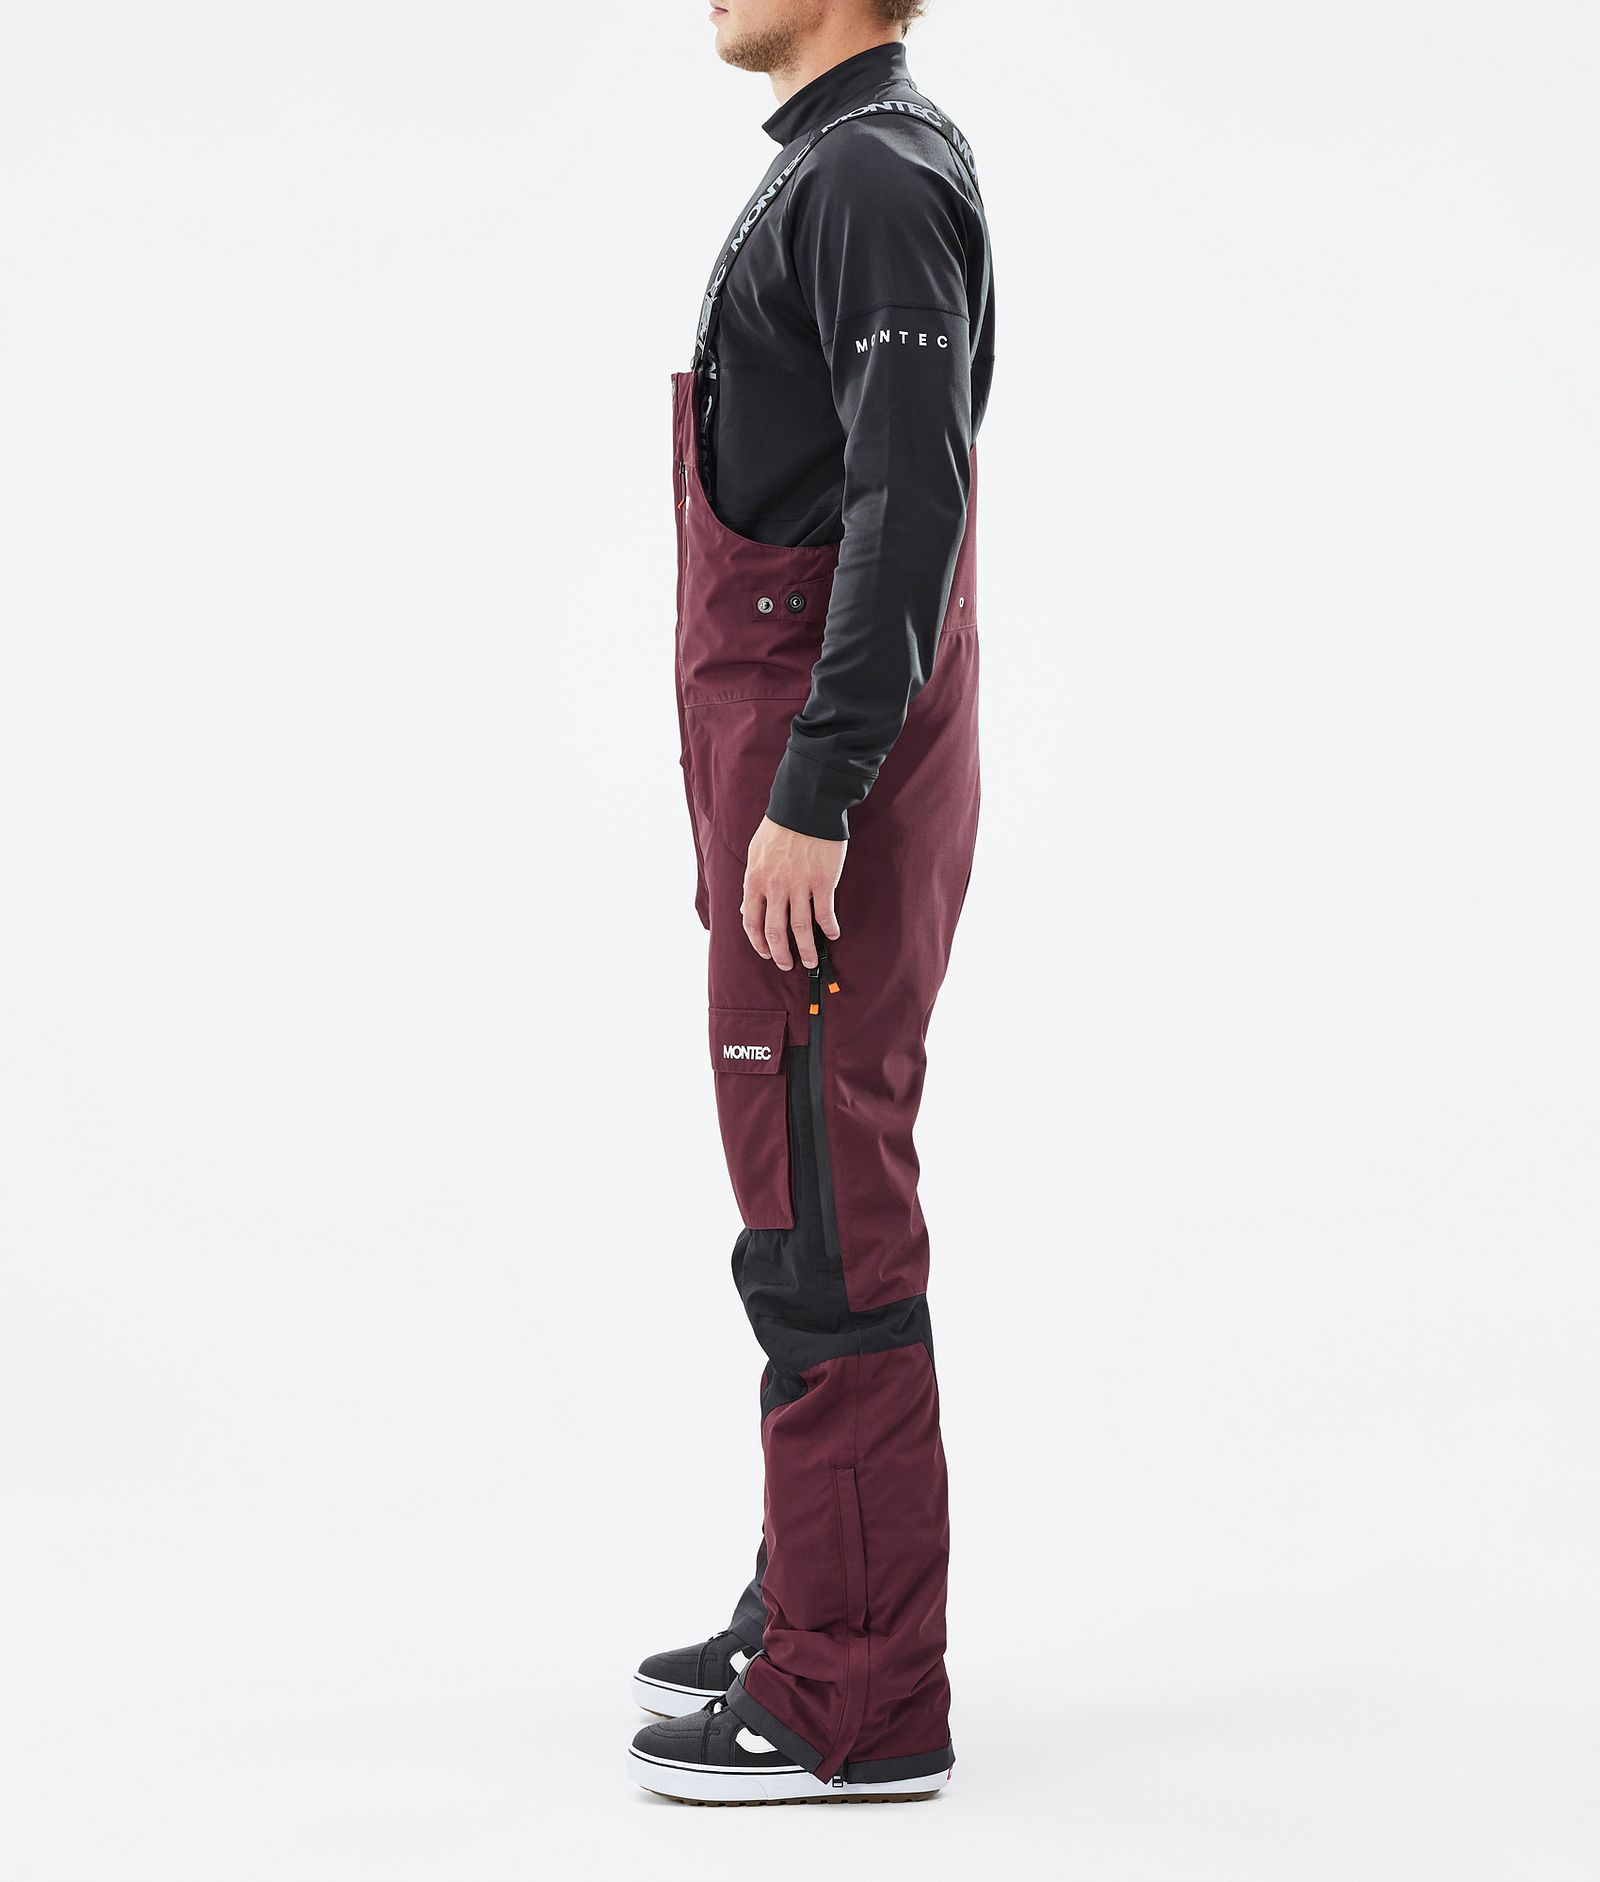 Fawk Pantaloni Snowboard Uomo Burgundy/Black